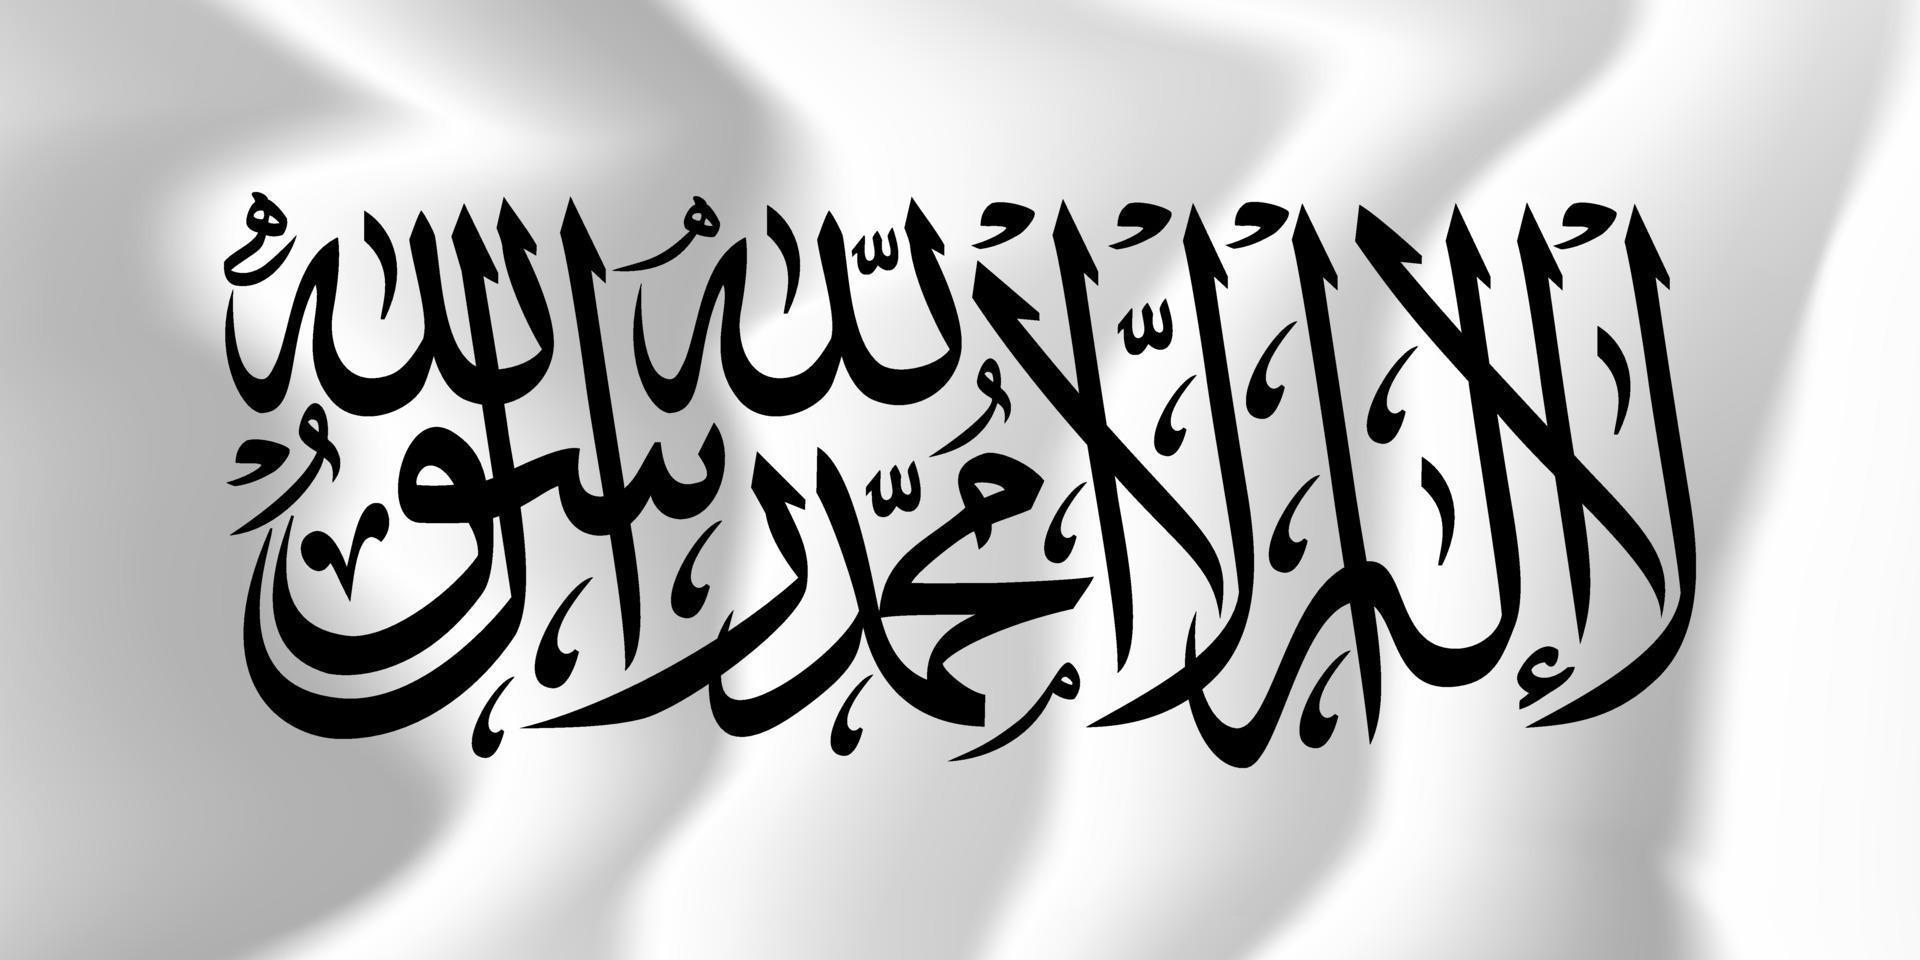 Taliban National Waving Flag Background Illustration vector